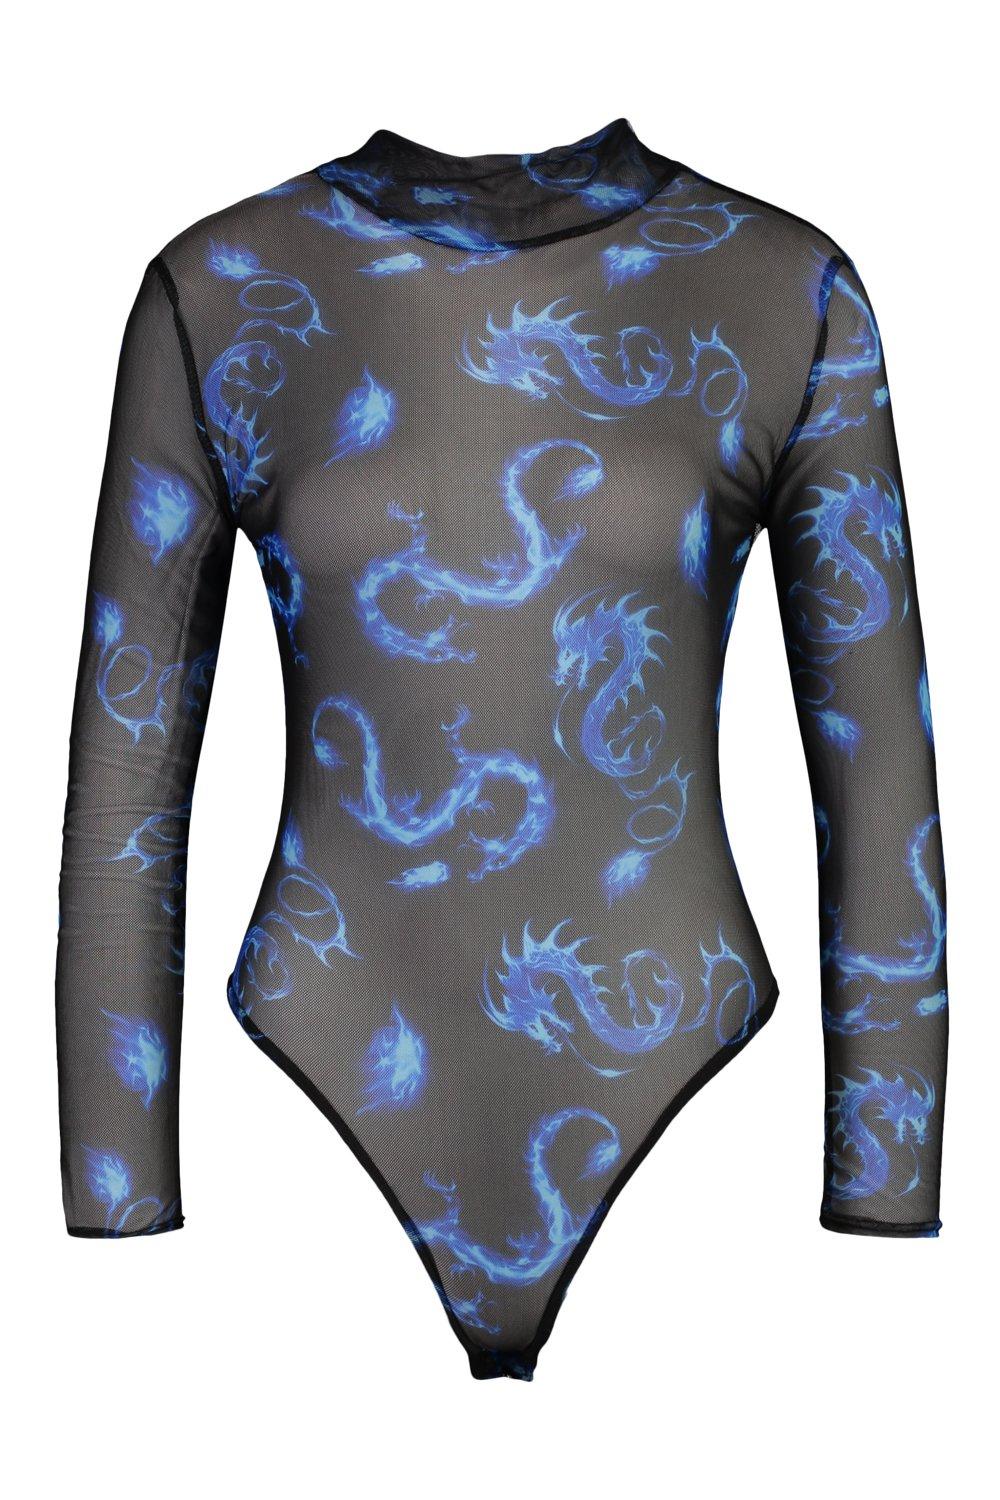 Black Dragon Printed Mesh Bodysuit, Tops